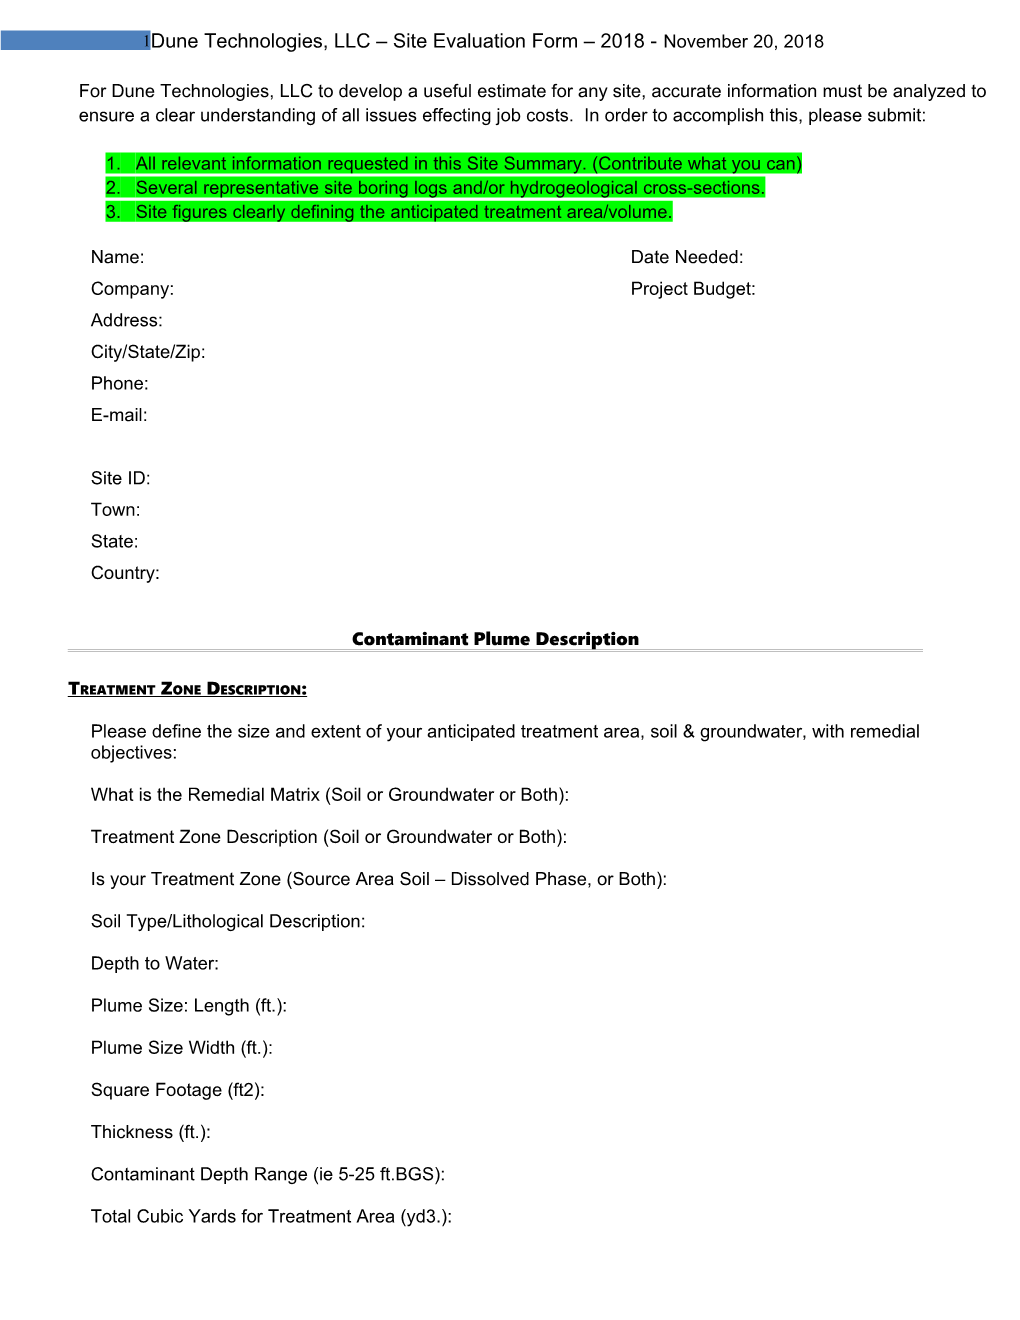 Dune Technologies, LLC Site Evaluation Form - 2014